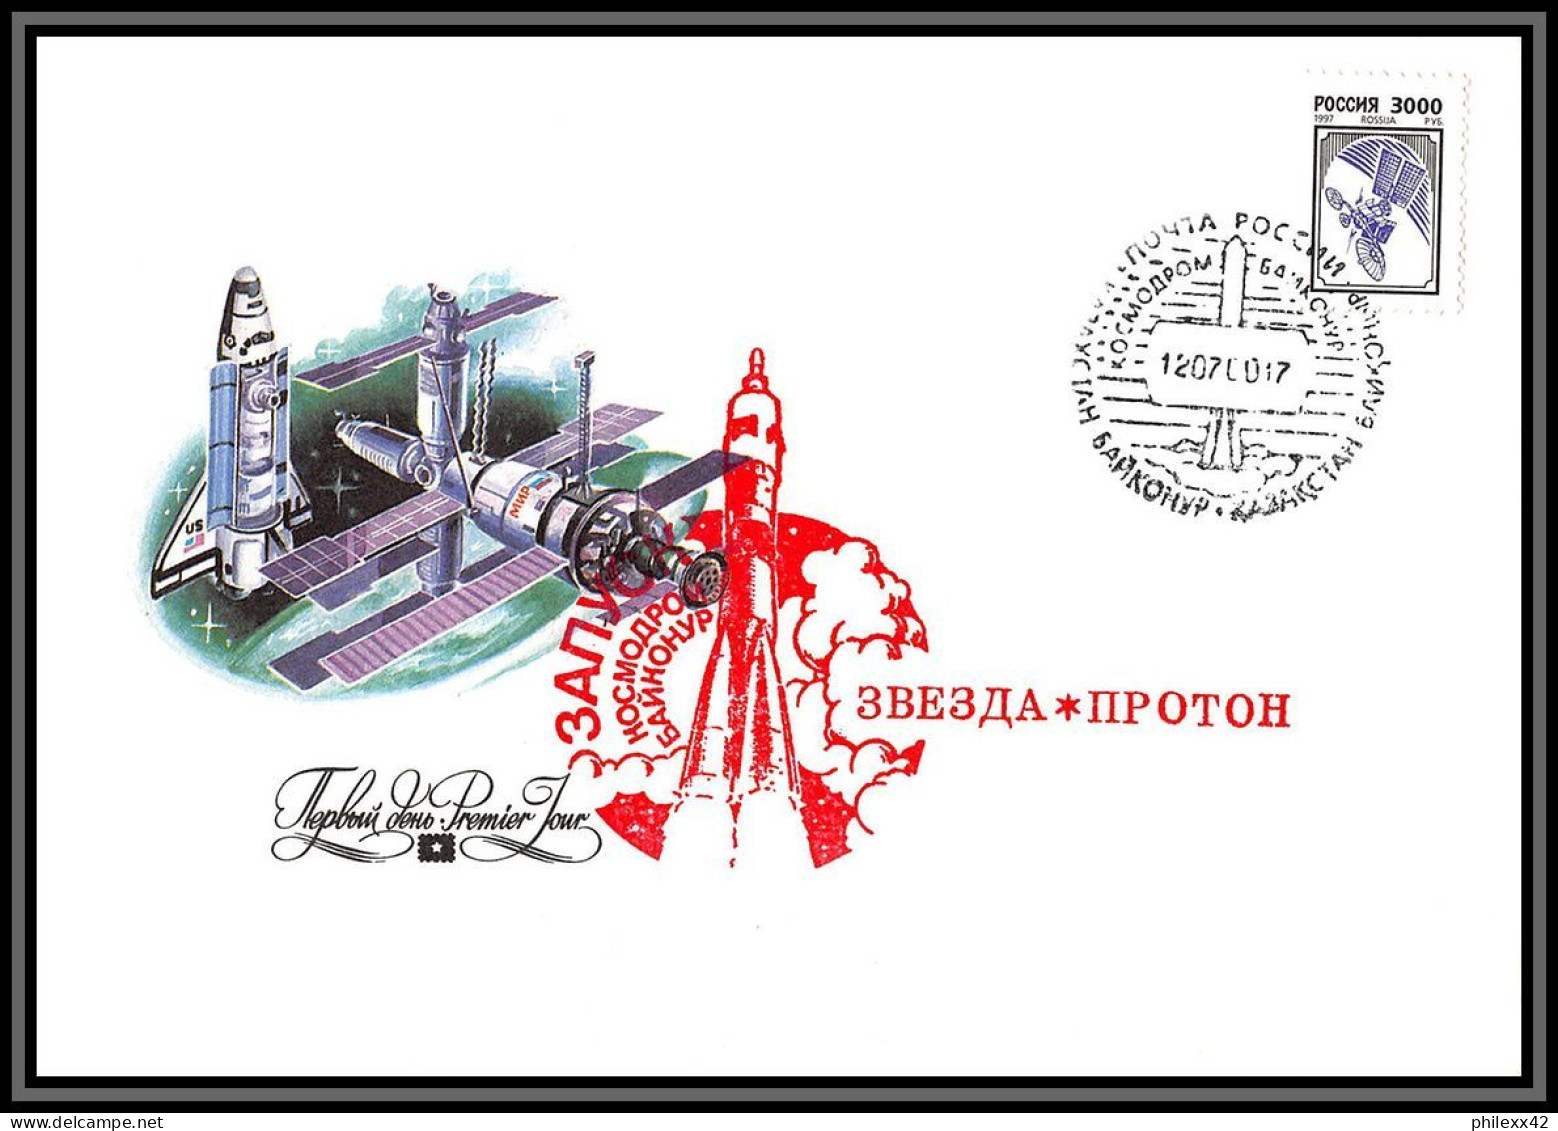 2569 Espace (space Raumfahrt) Russie (Russia) Russia 12/7/2000 Iss 01 Baikonur - Asien